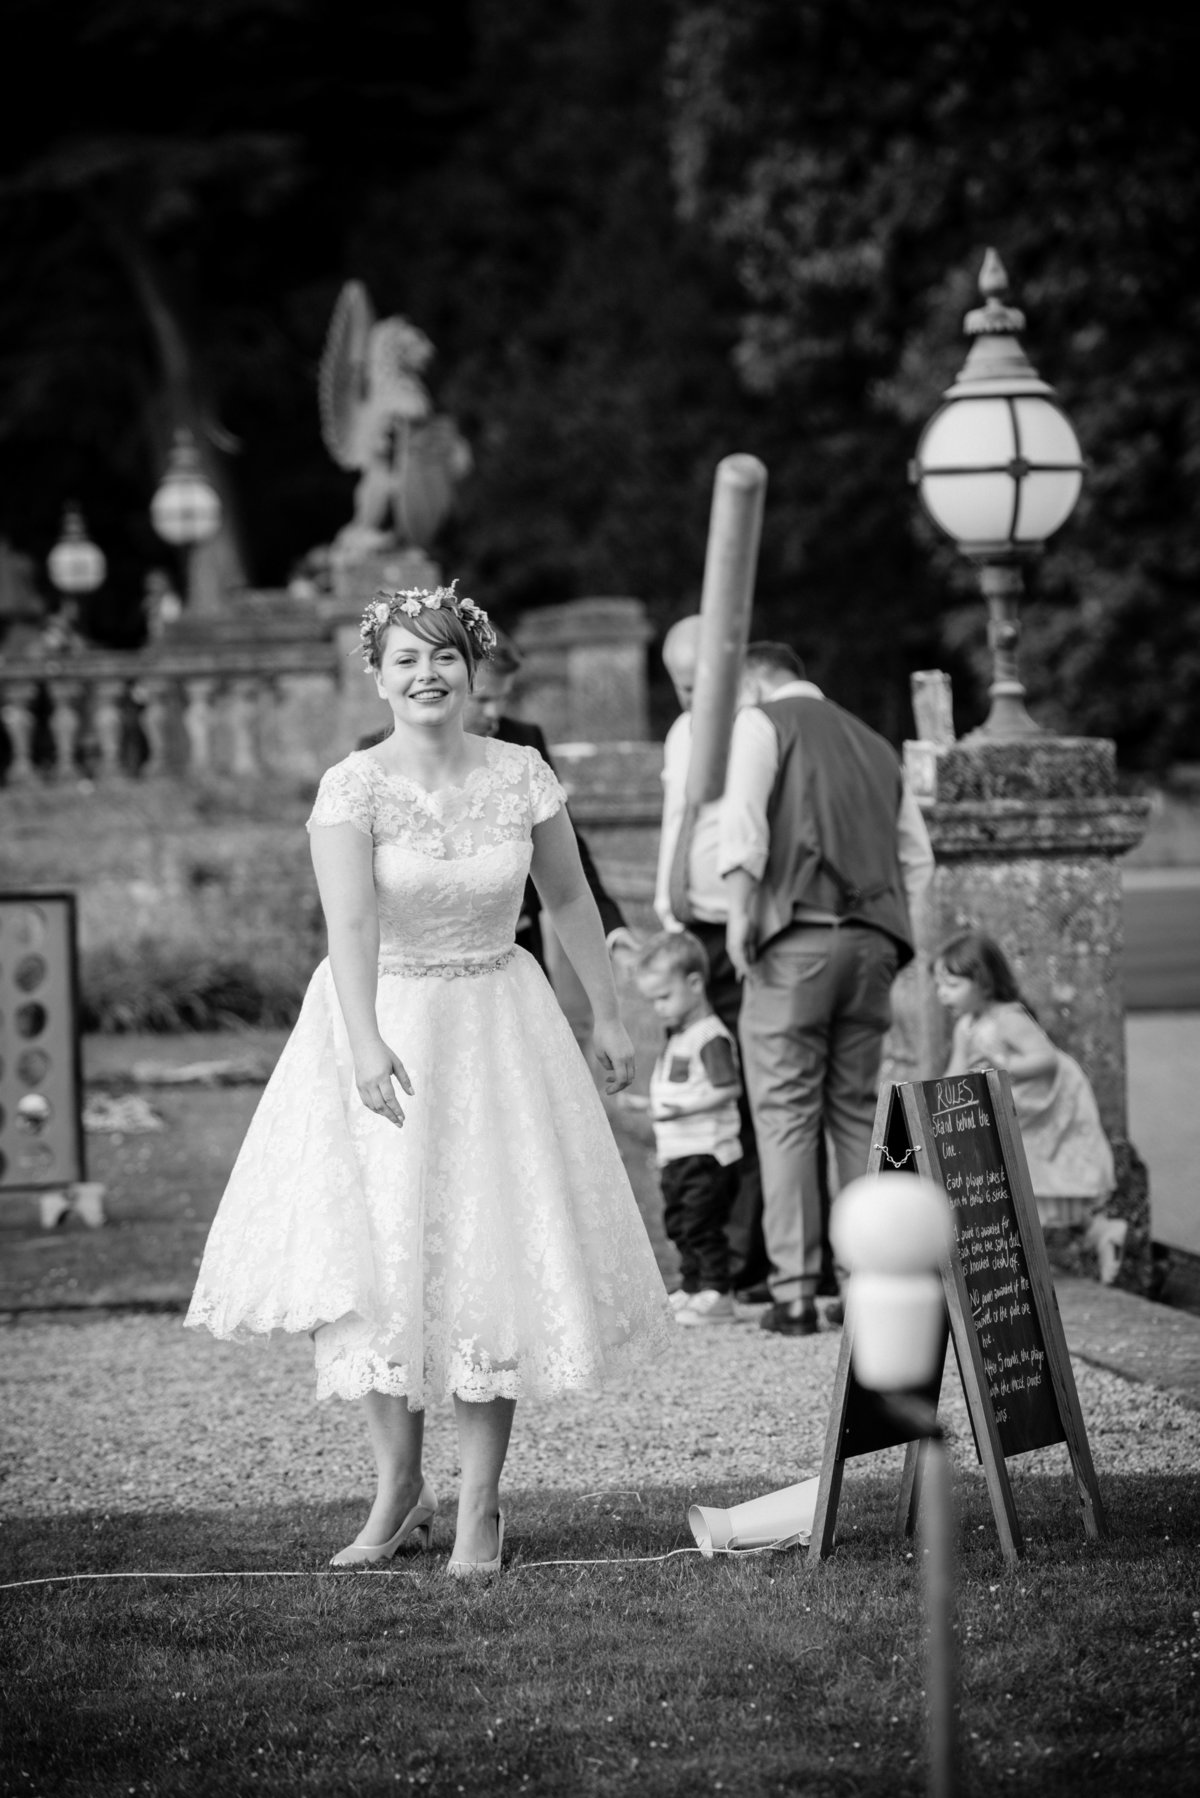 Heythrop Park Enstone Oxfordshire wedding photography